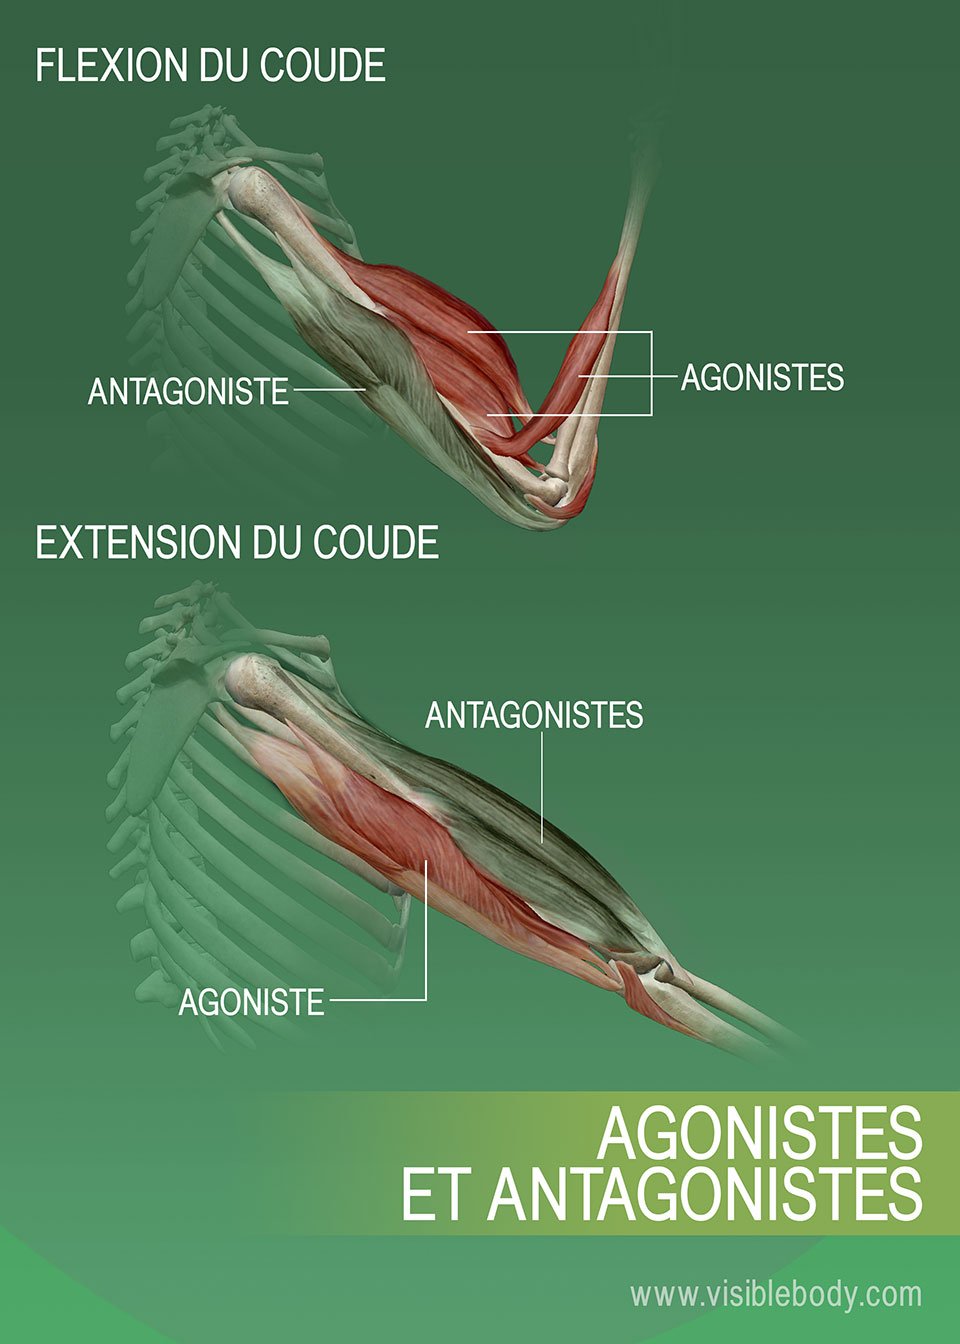 Agonistes, antagonistes et synergistes des muscles